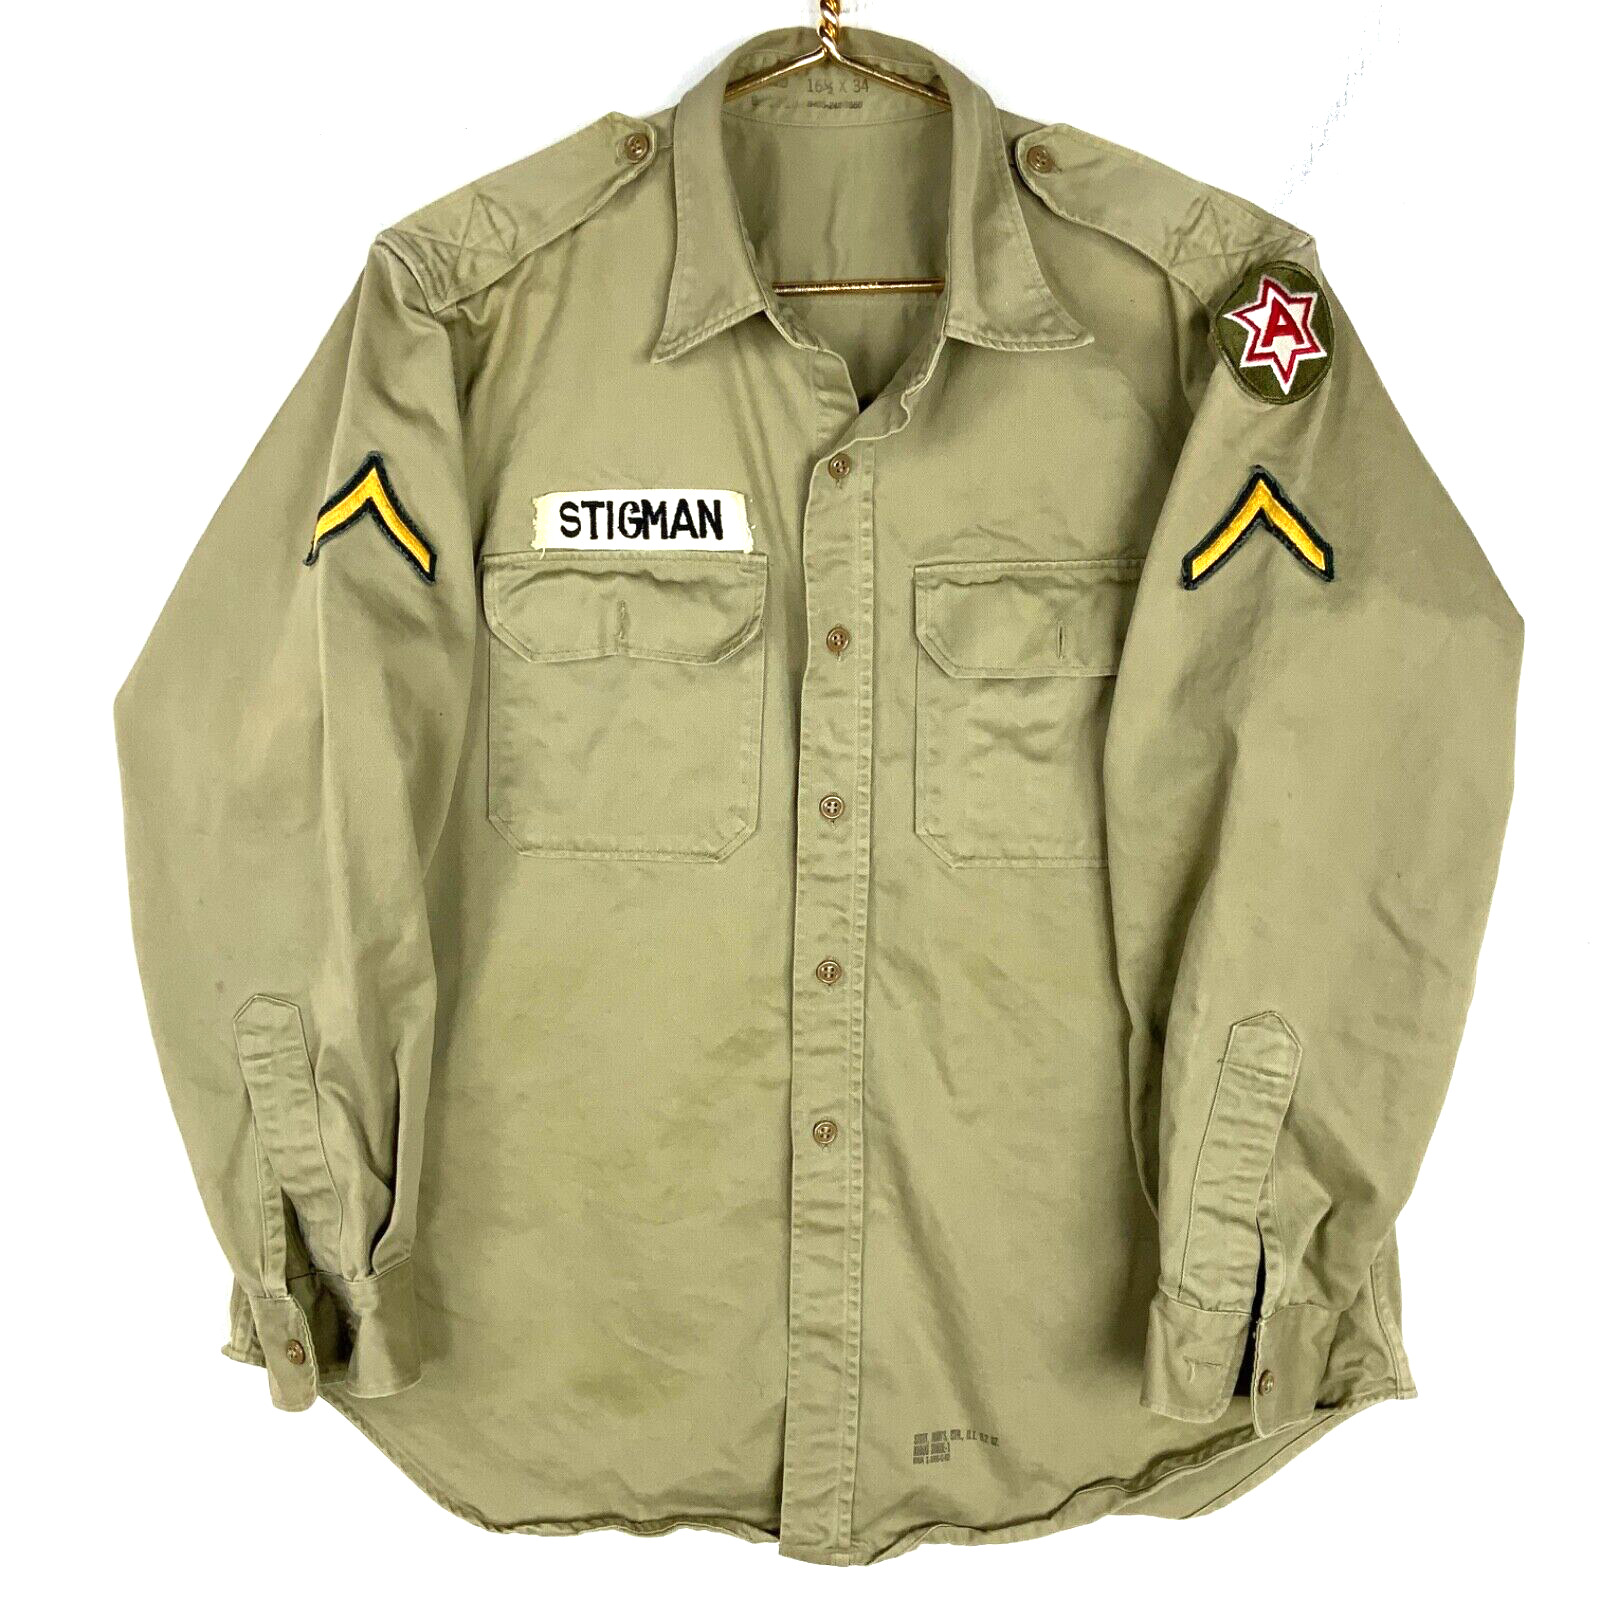 Vintage Us Army Og-107 Button Up Shirt Size 16.5x34 Yellow 1962 Vietnam Era 60s